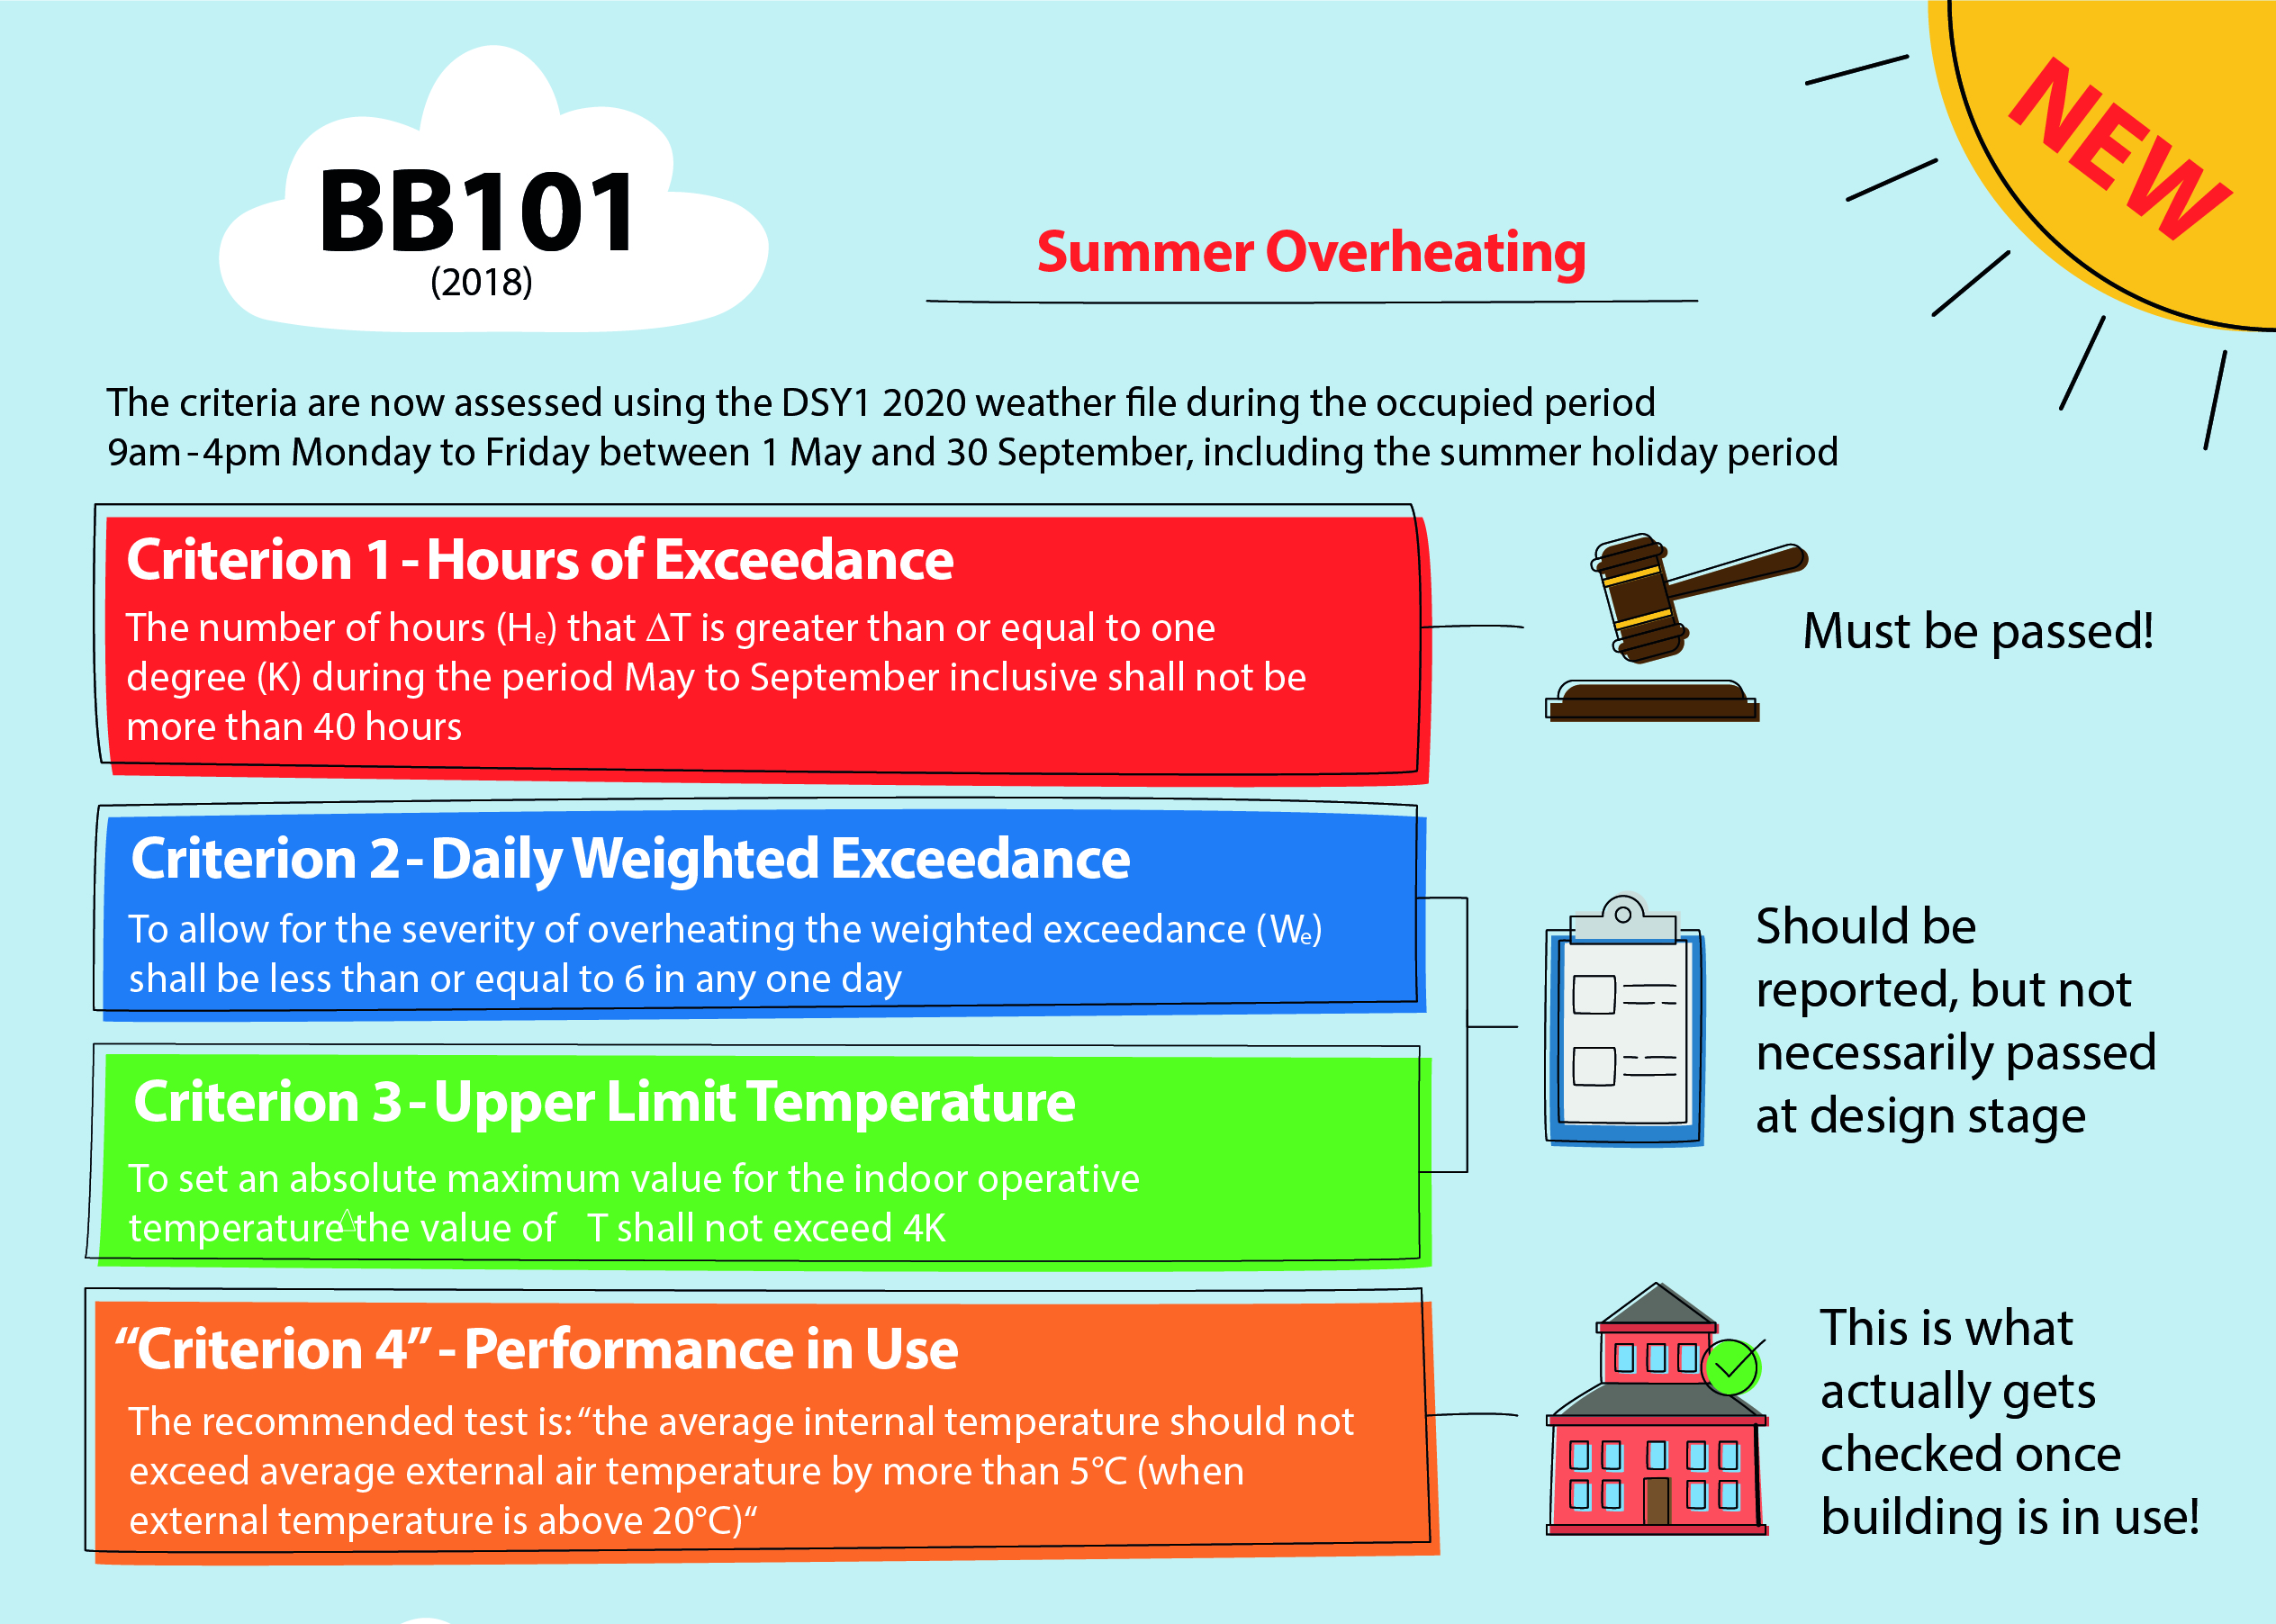 Summer overheating BB101 document